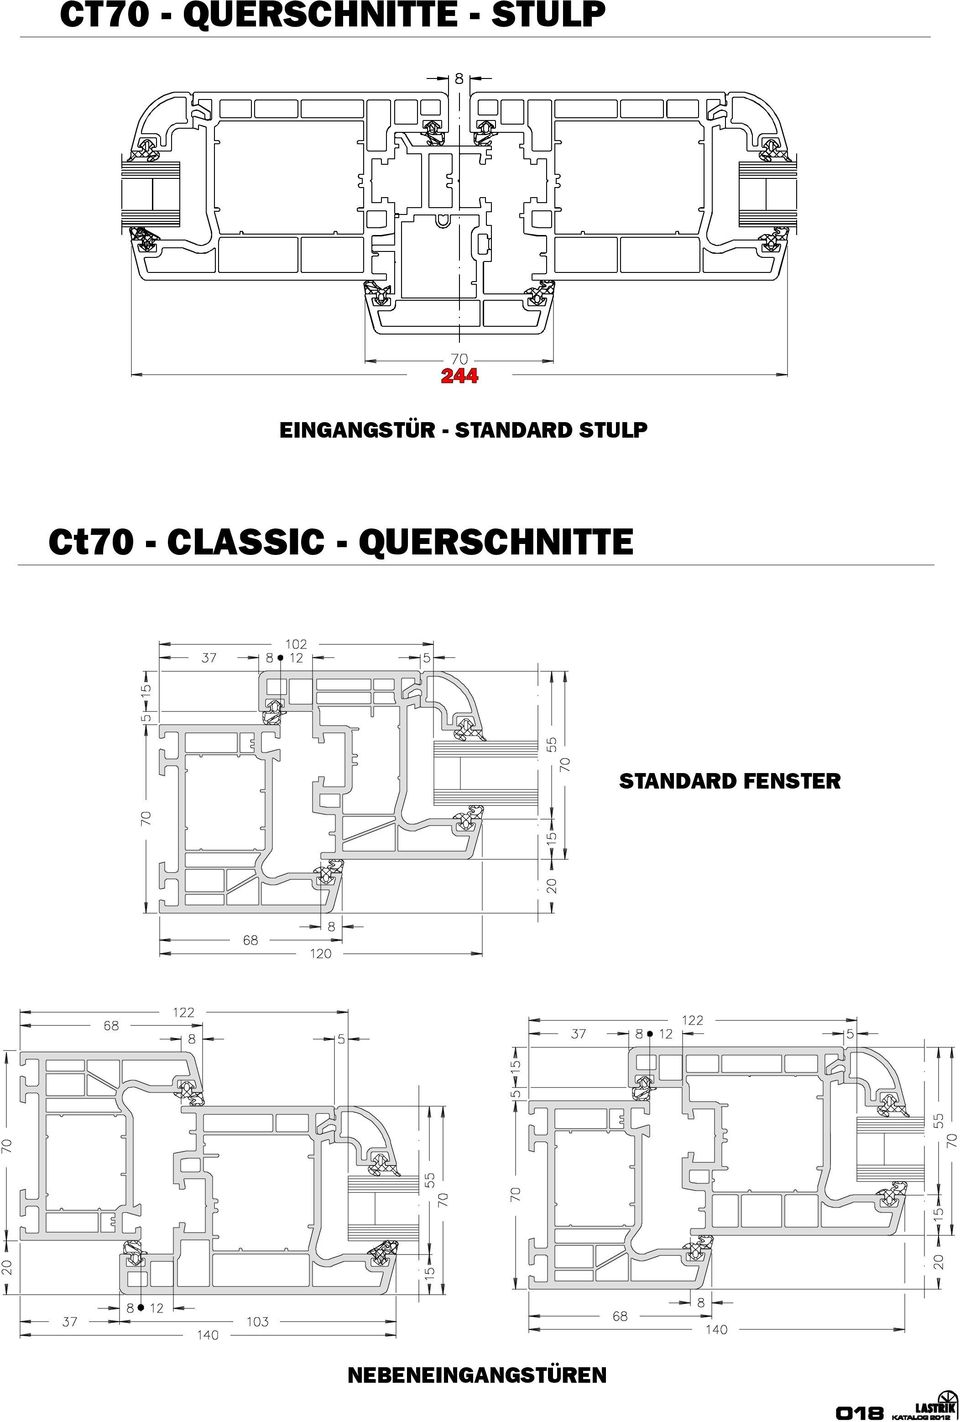 Ct70 - CLASSIC - QUERSCHNITTE